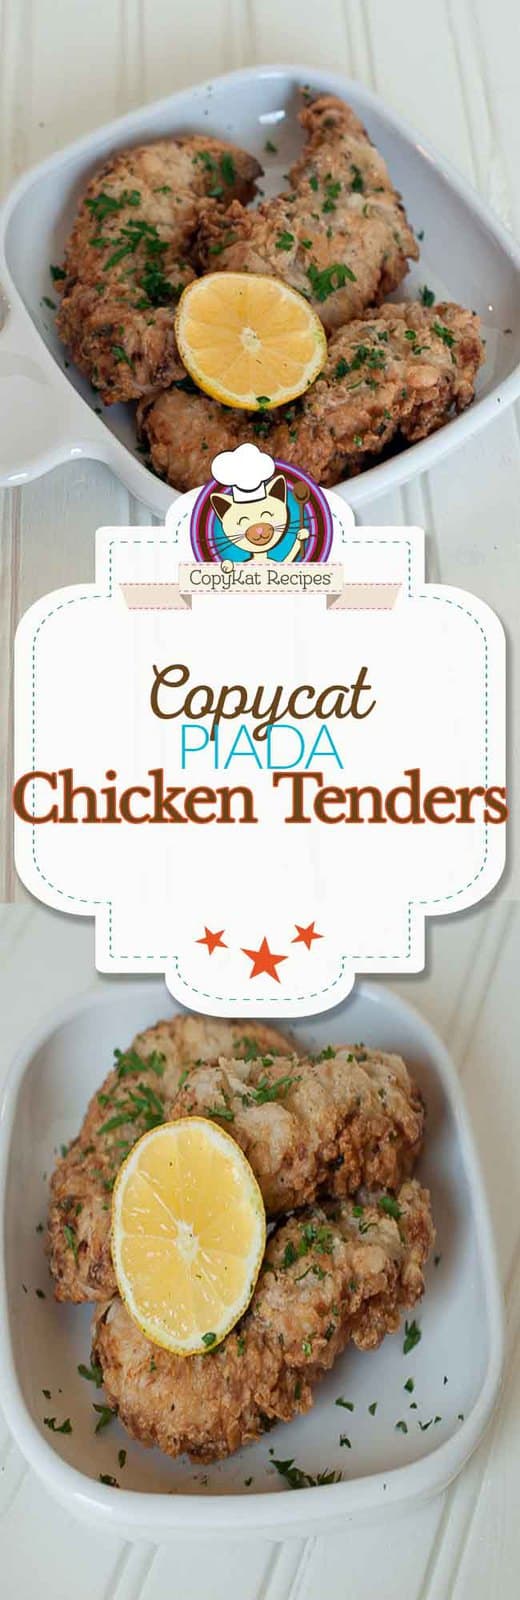 Piada Chicken Tenders